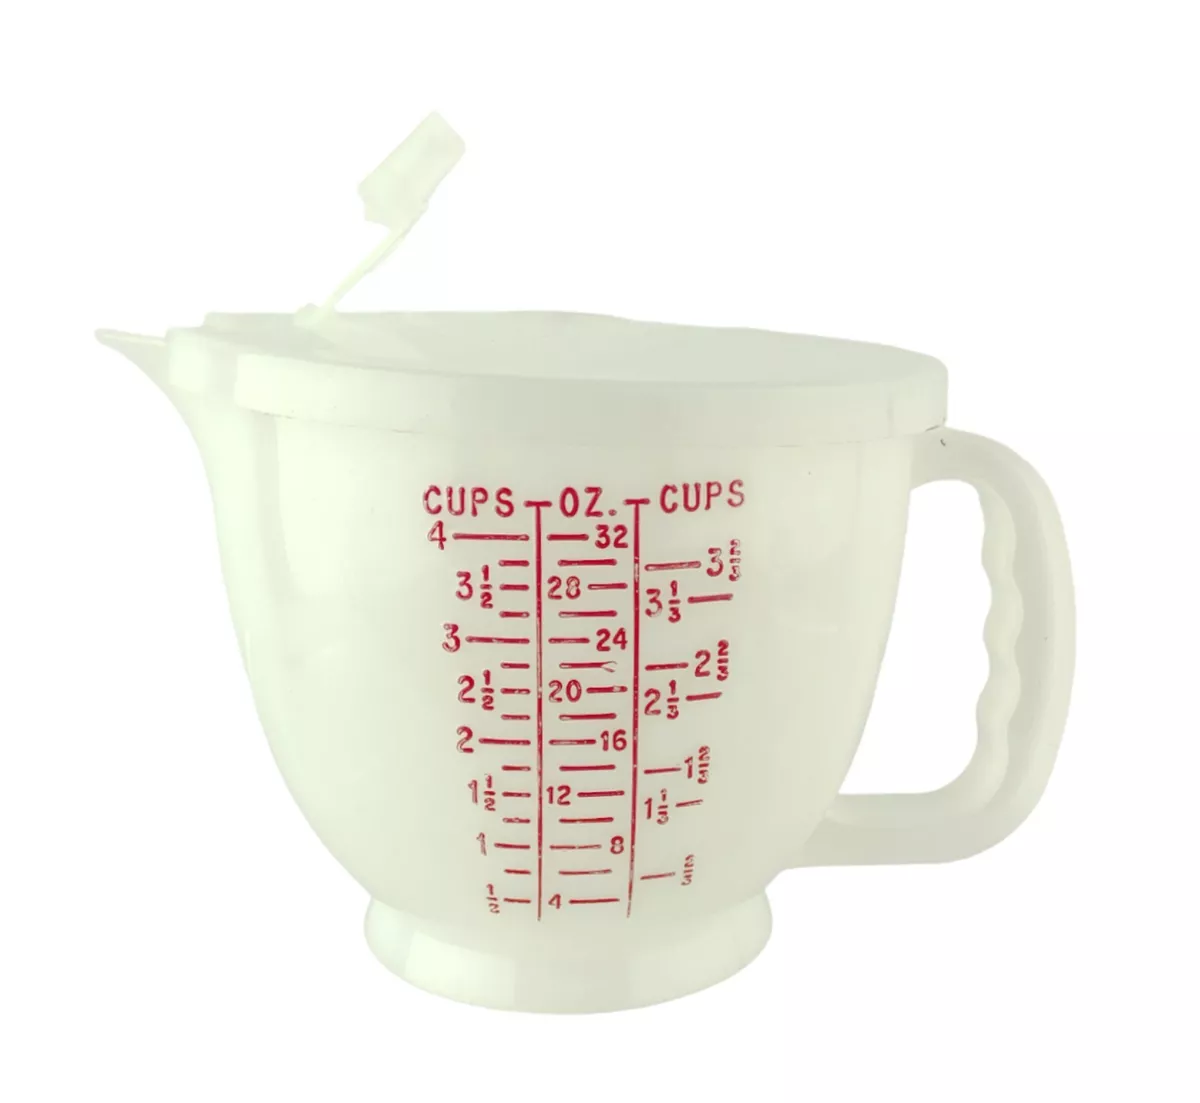 Tupperware Brand Measuring Cup 